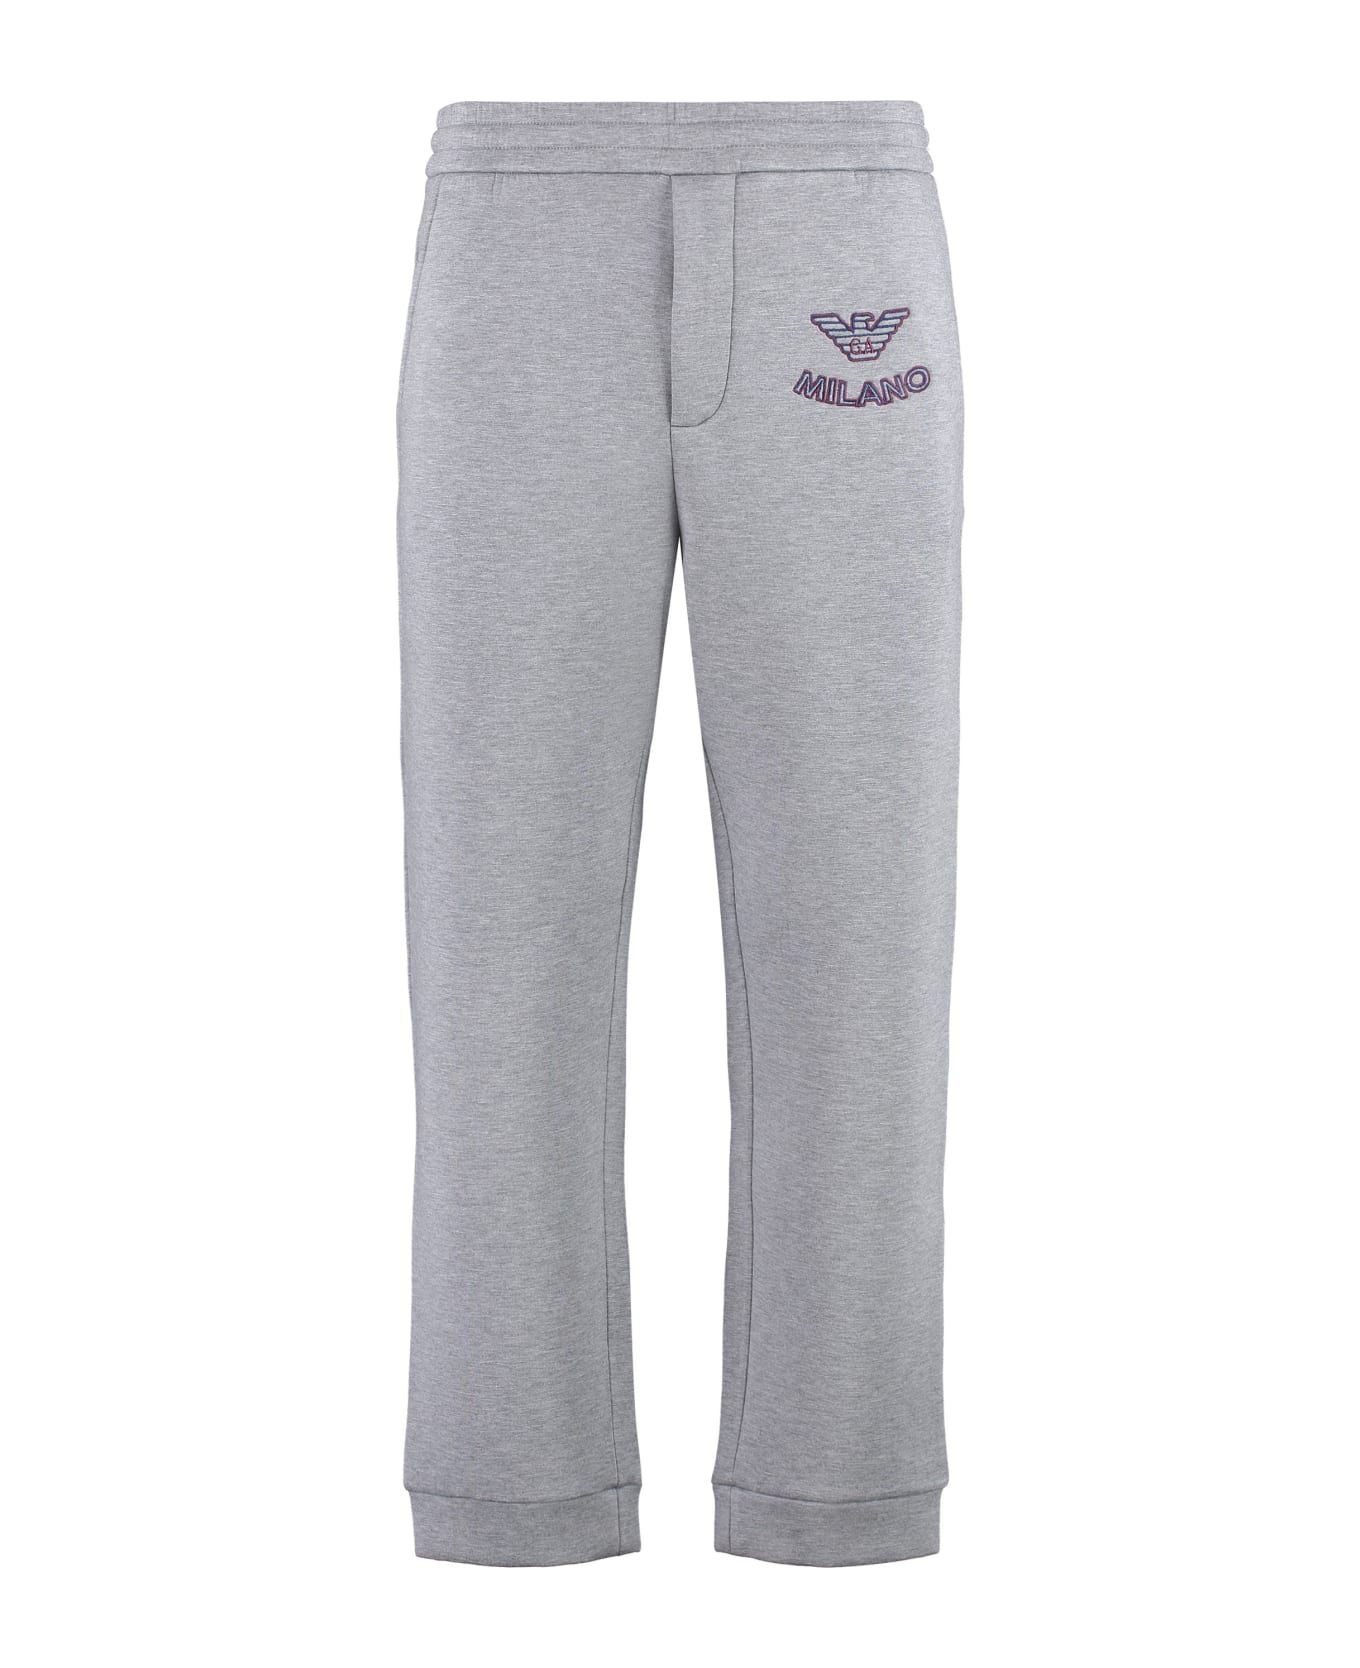 Emporio Armani Embroidered Sweatpants - grey